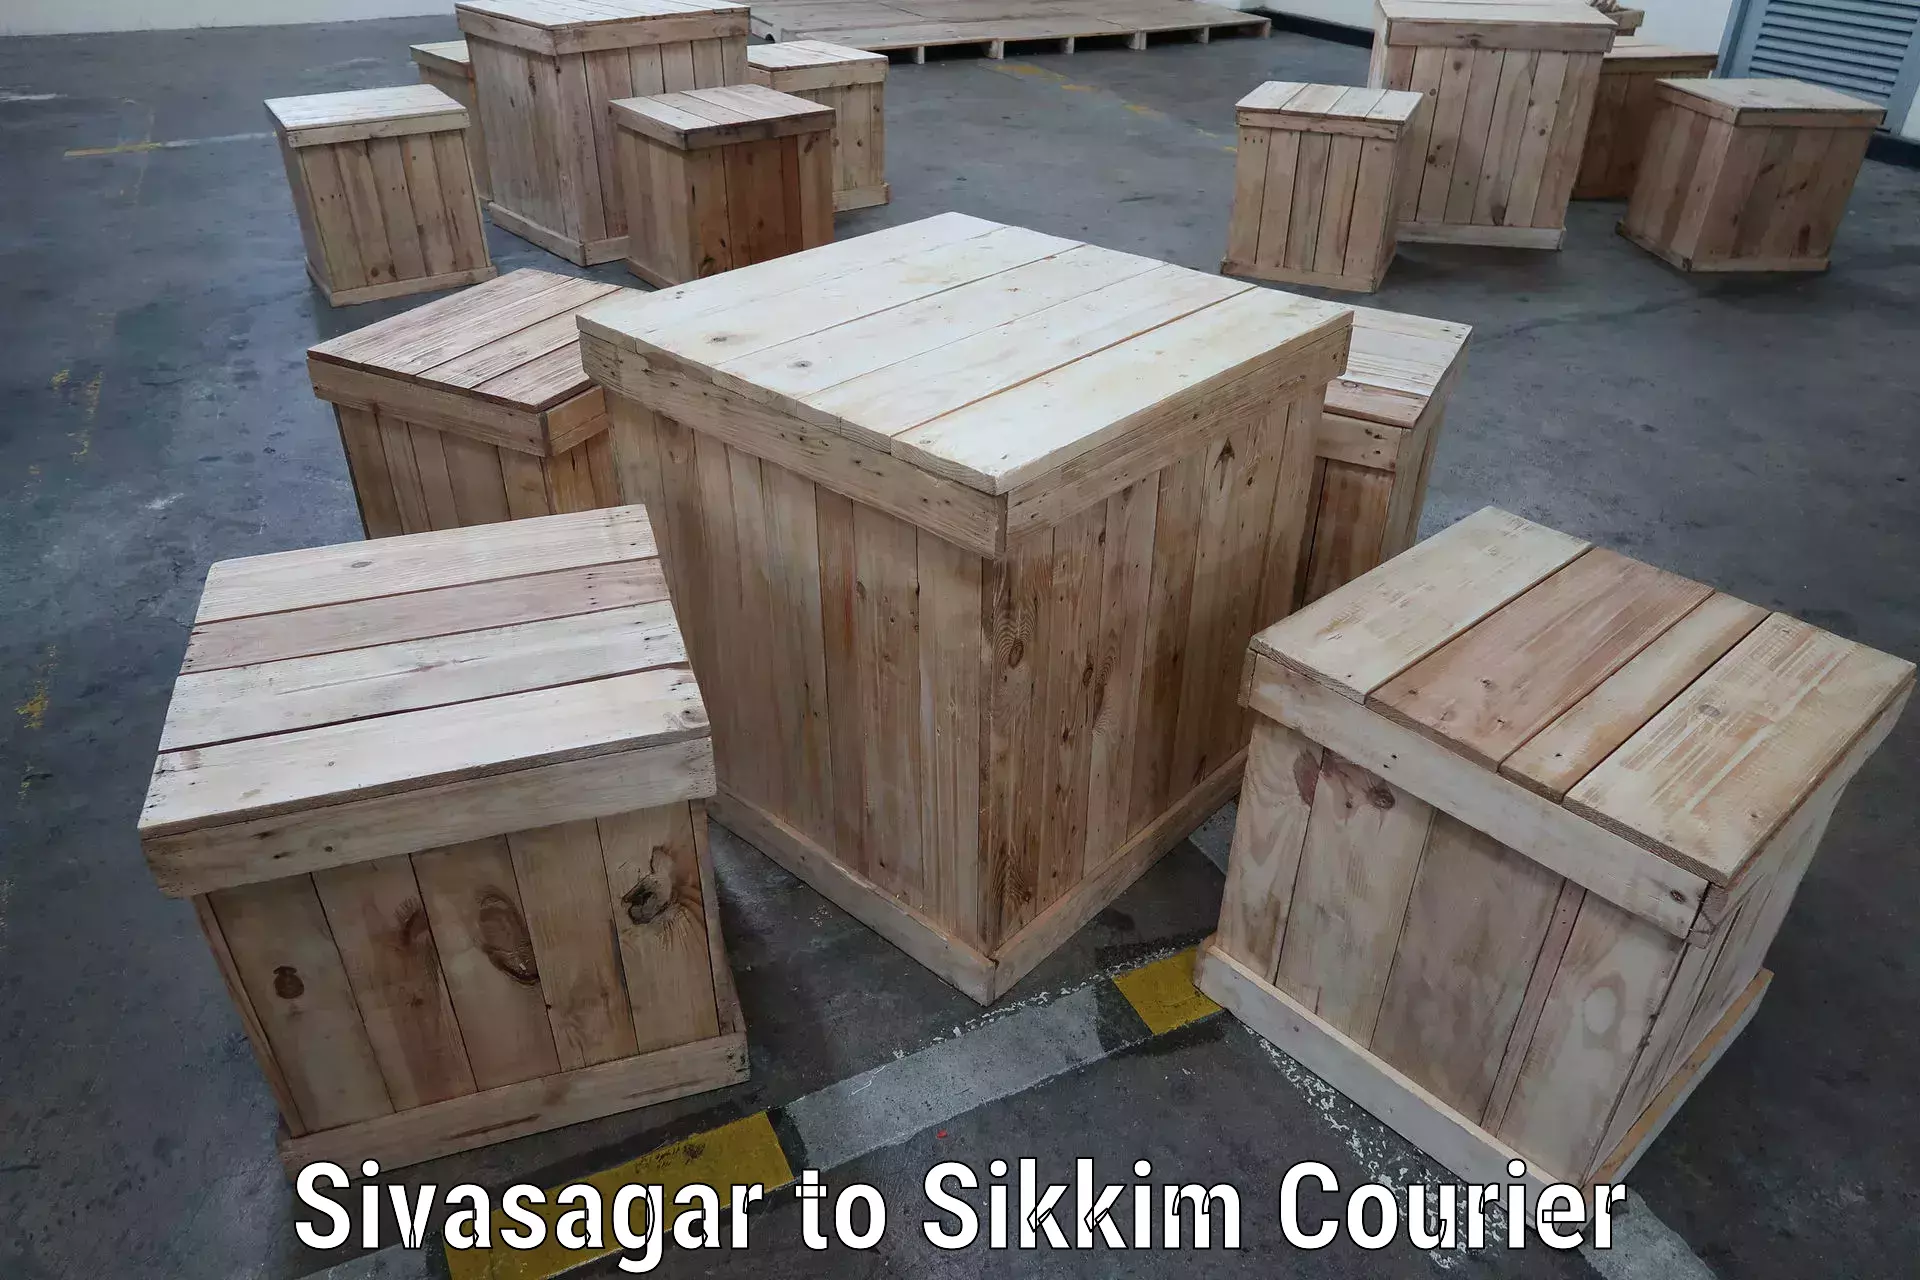 State-of-the-art courier technology Sivasagar to Gangtok